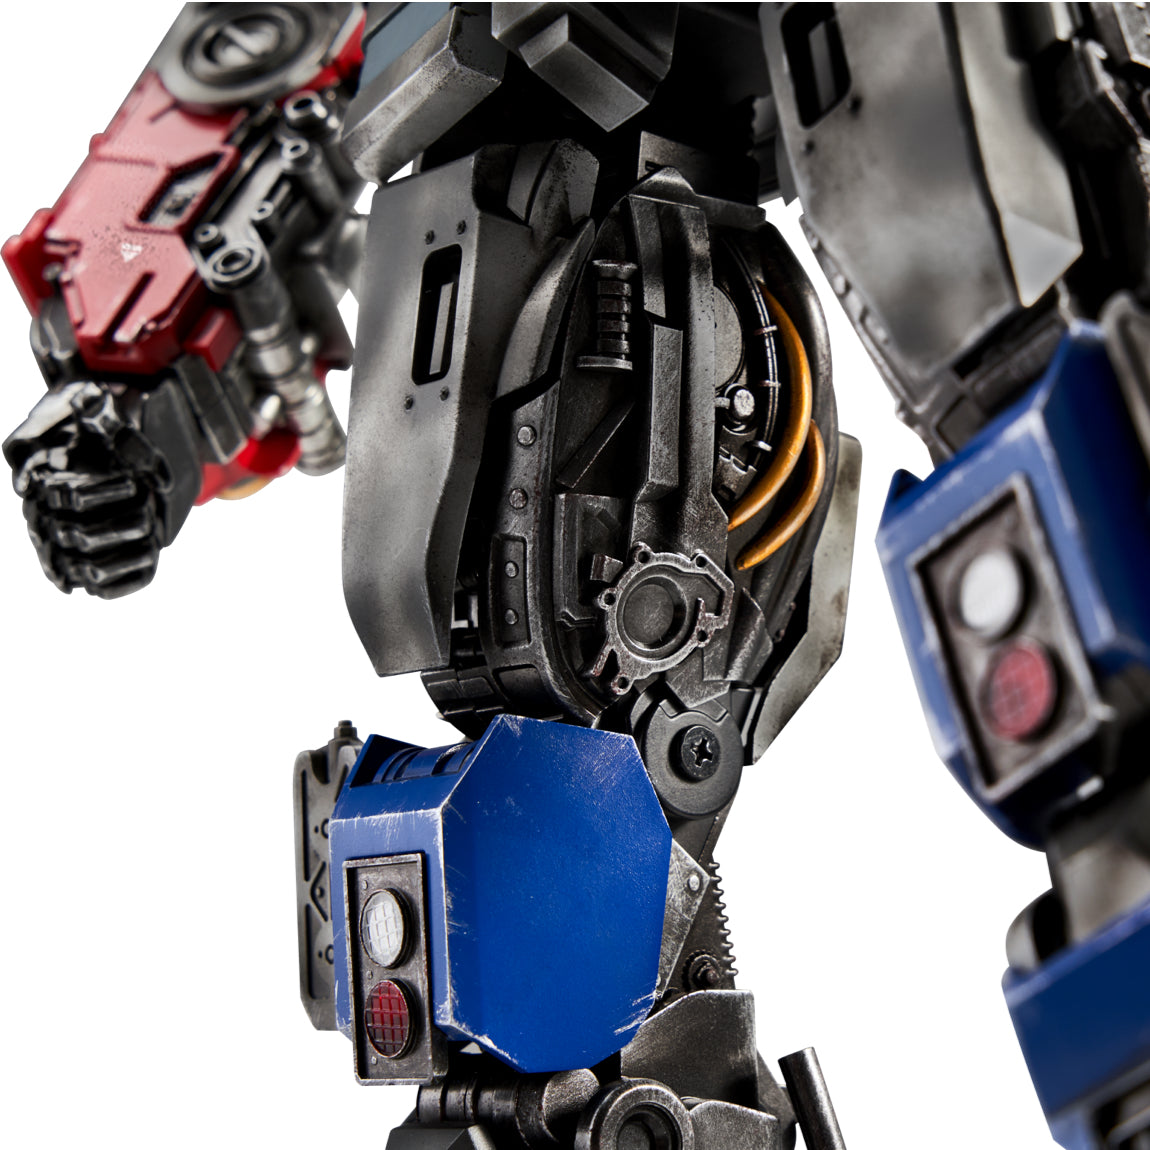 Robosen - Transformers: Rise of the Beasts - Optimus Prime Signature Robot (Limited Ed.)